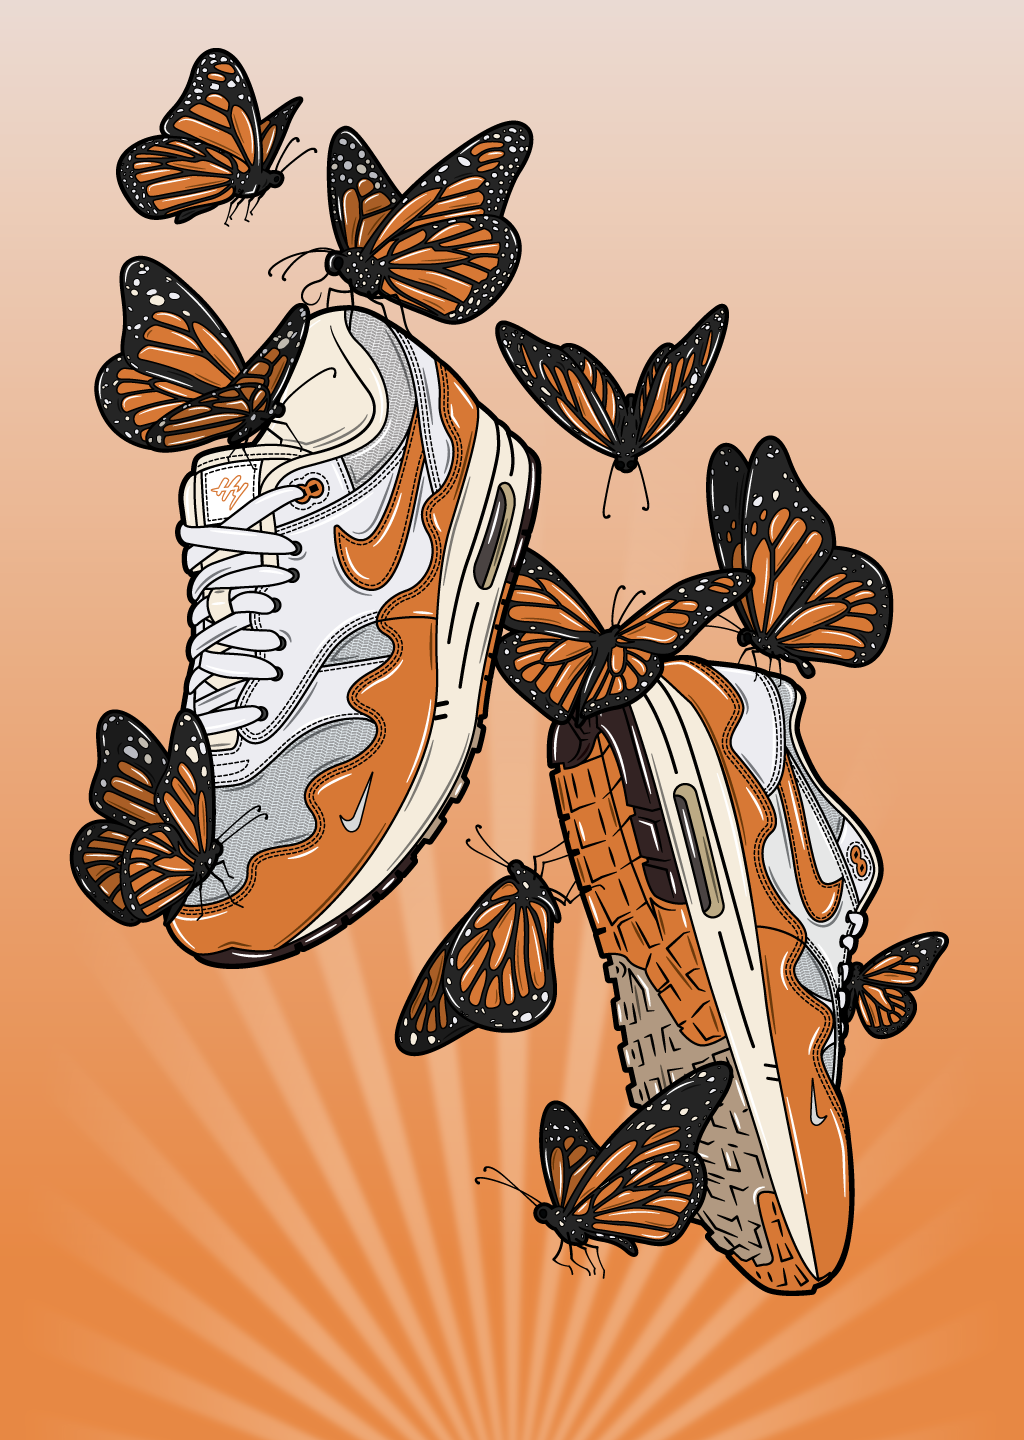 Hyprints | Shop - 'Patta Air Max 1 Monarch' Sneaker art print